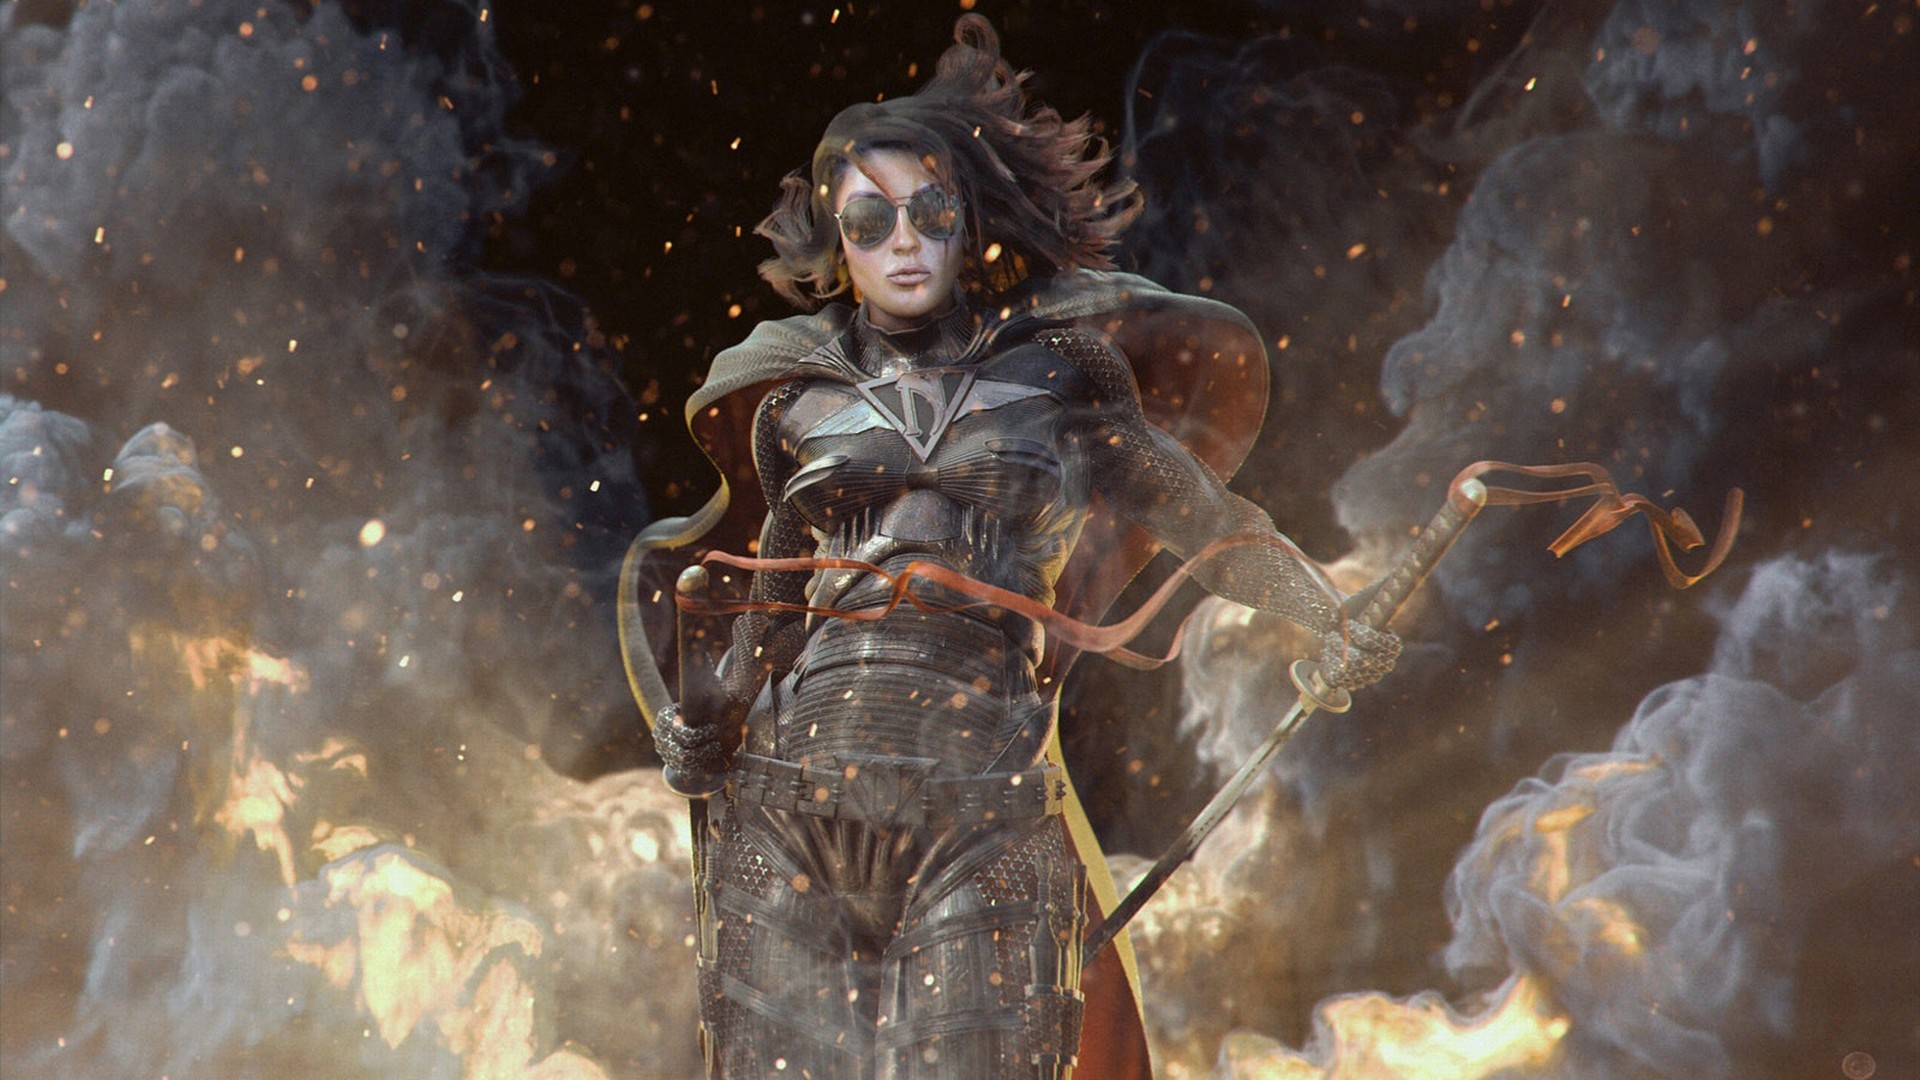 Fantasy women warrior Wallpaper Backgrounds